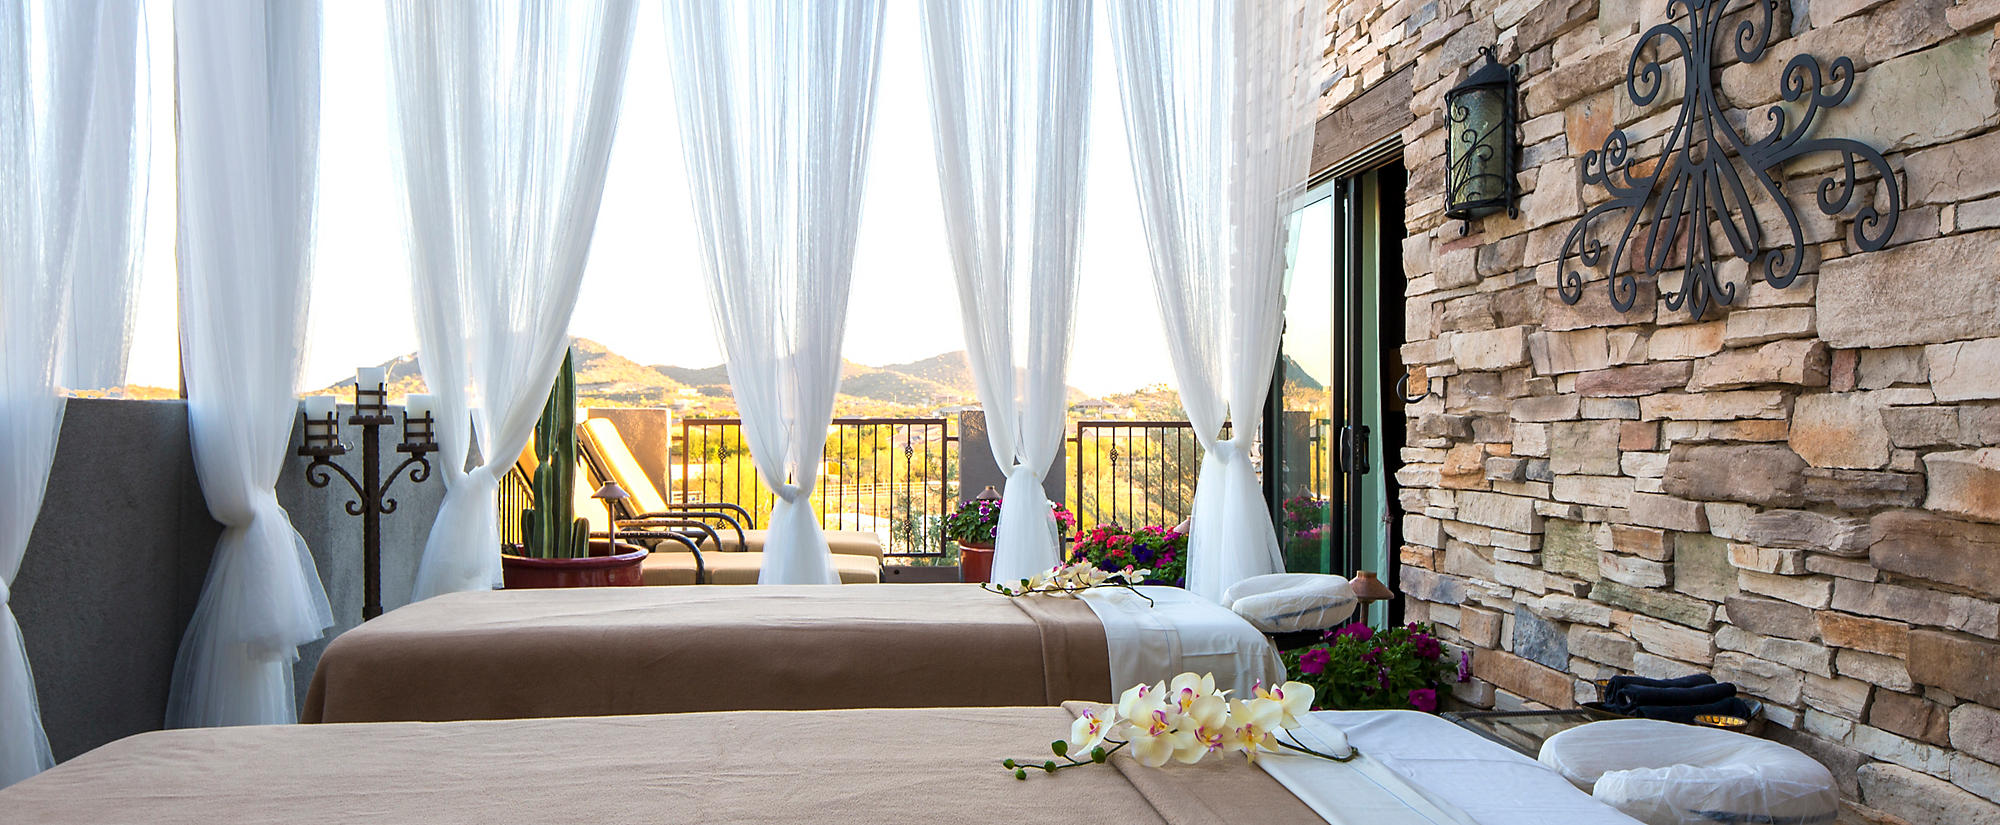 Cibola Vista Resort and Spa outdoor massage